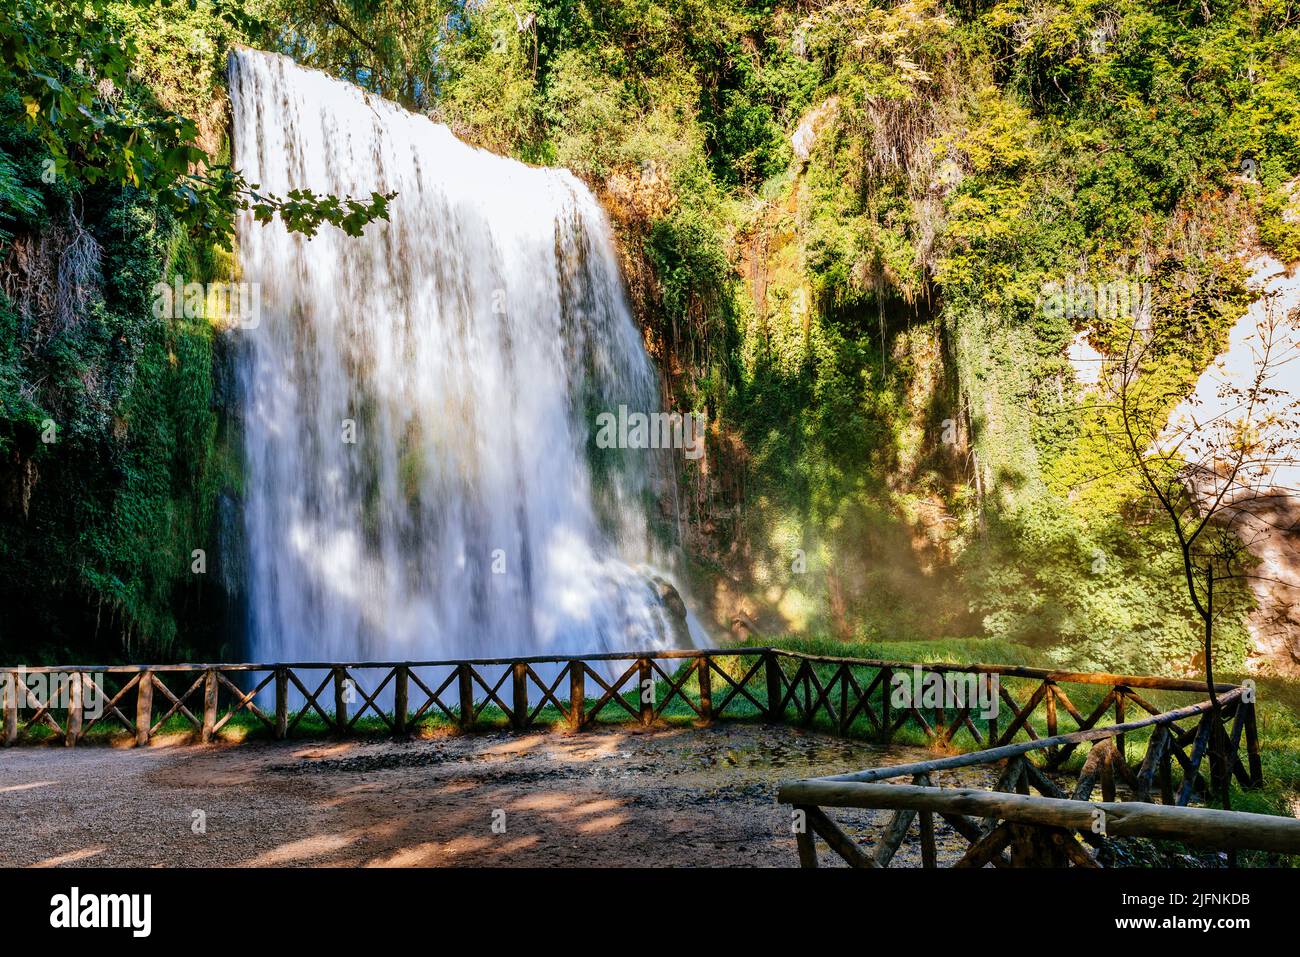 The waterfall called 'La Caprichosa - whimsical'. Natural Park of the Monasterio de Piedra - Stone Monastery. Nuévalos, Zaragoza, Aragón, Spain, Europ Stock Photo